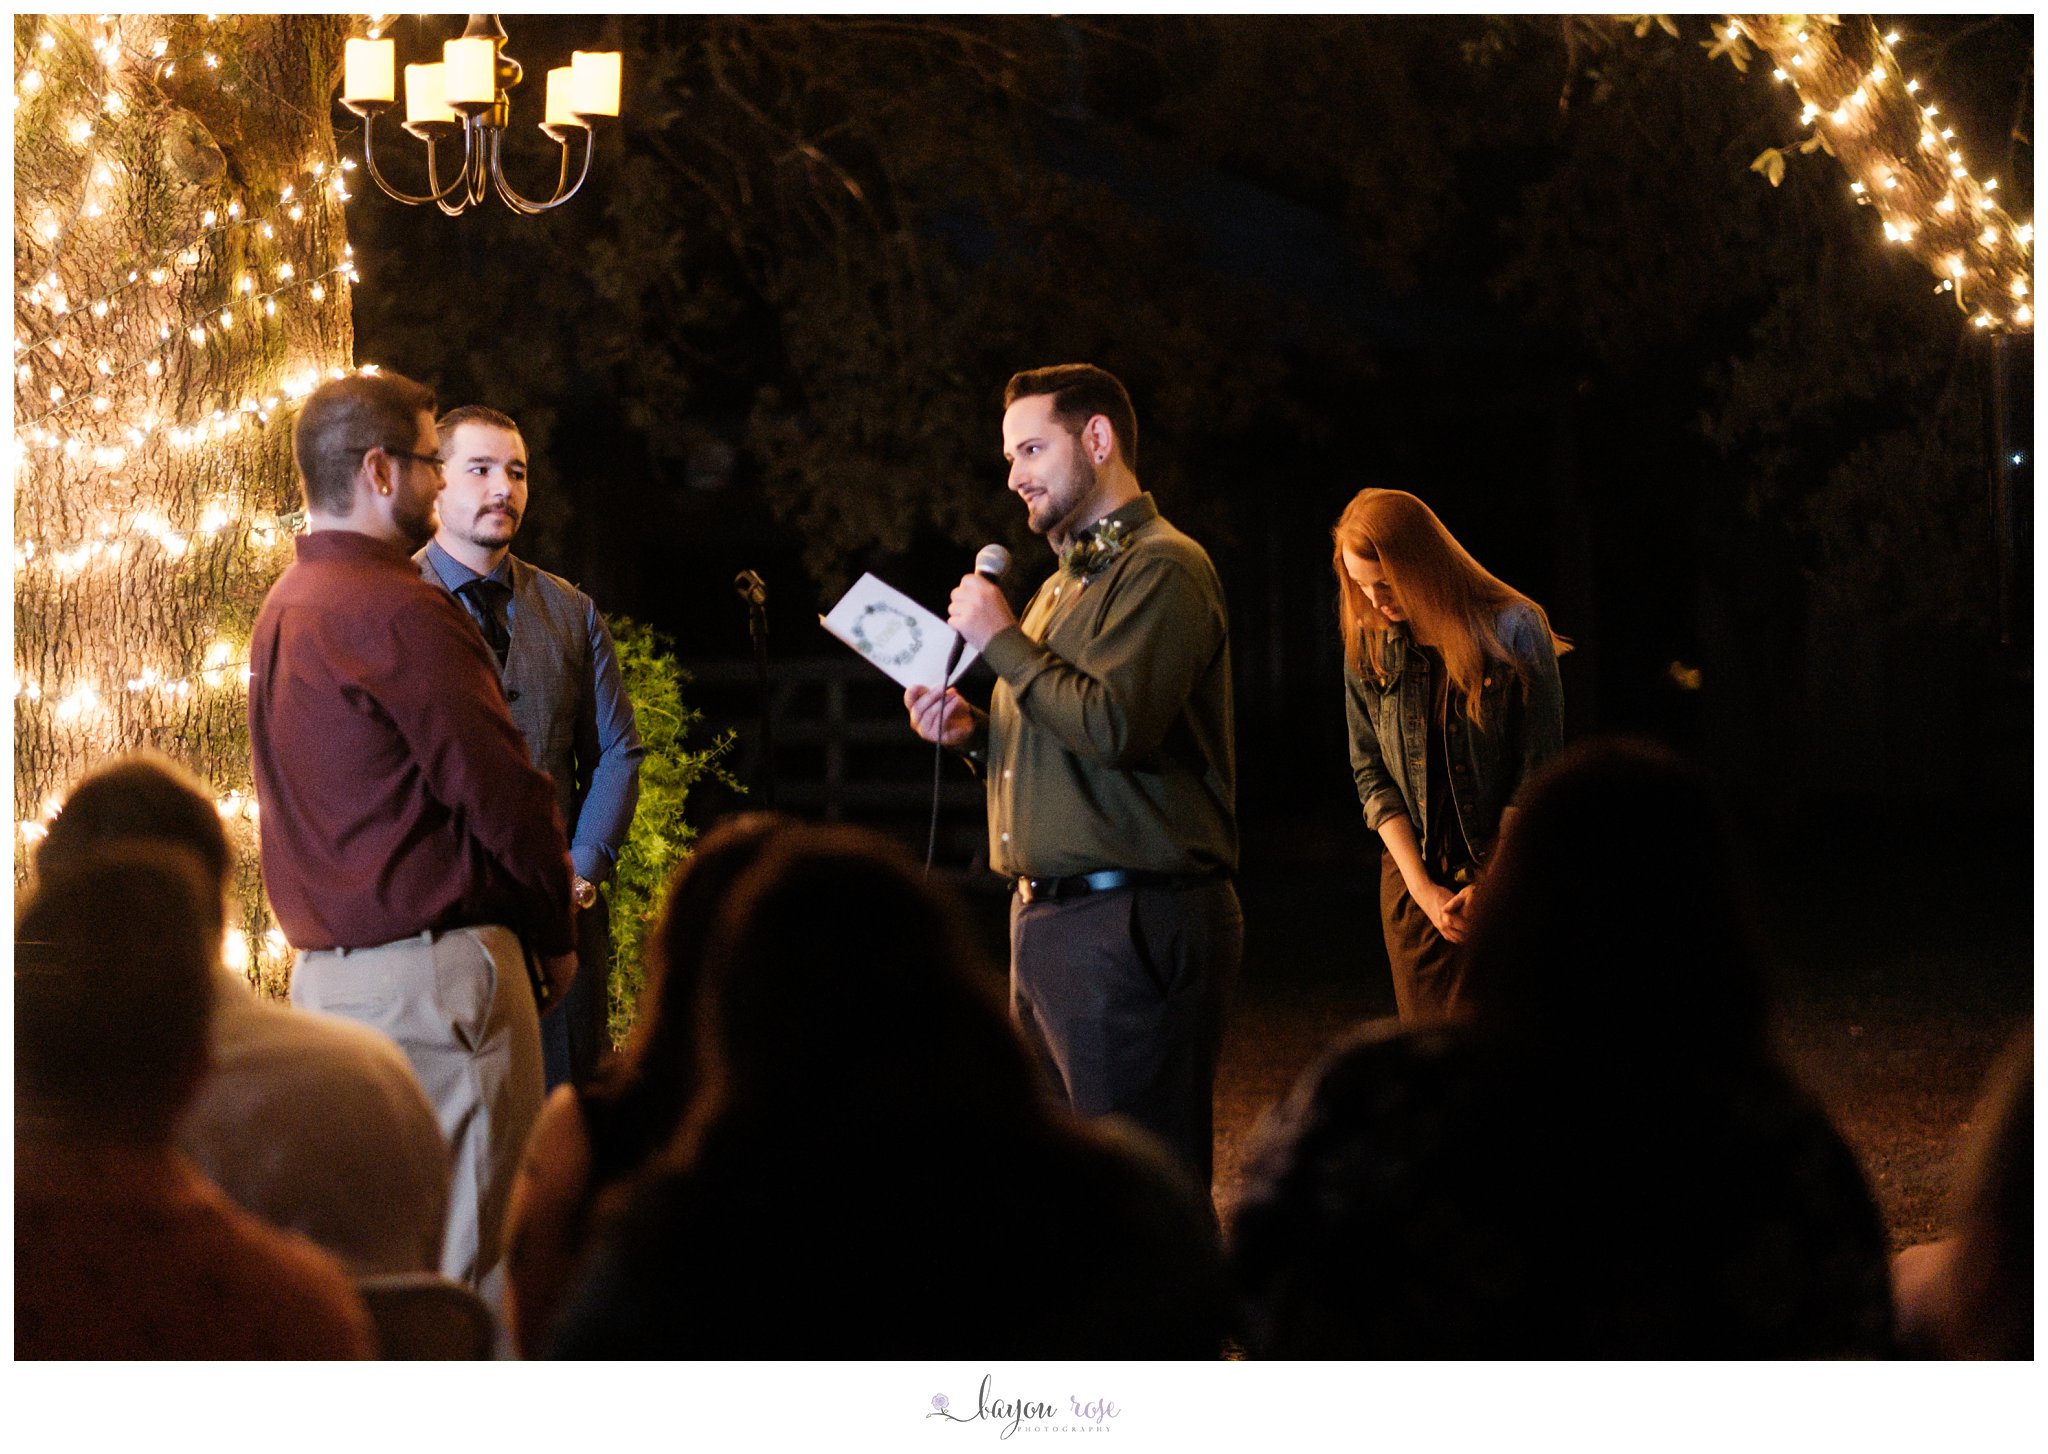 Gay wedding vows under an oak tree at night